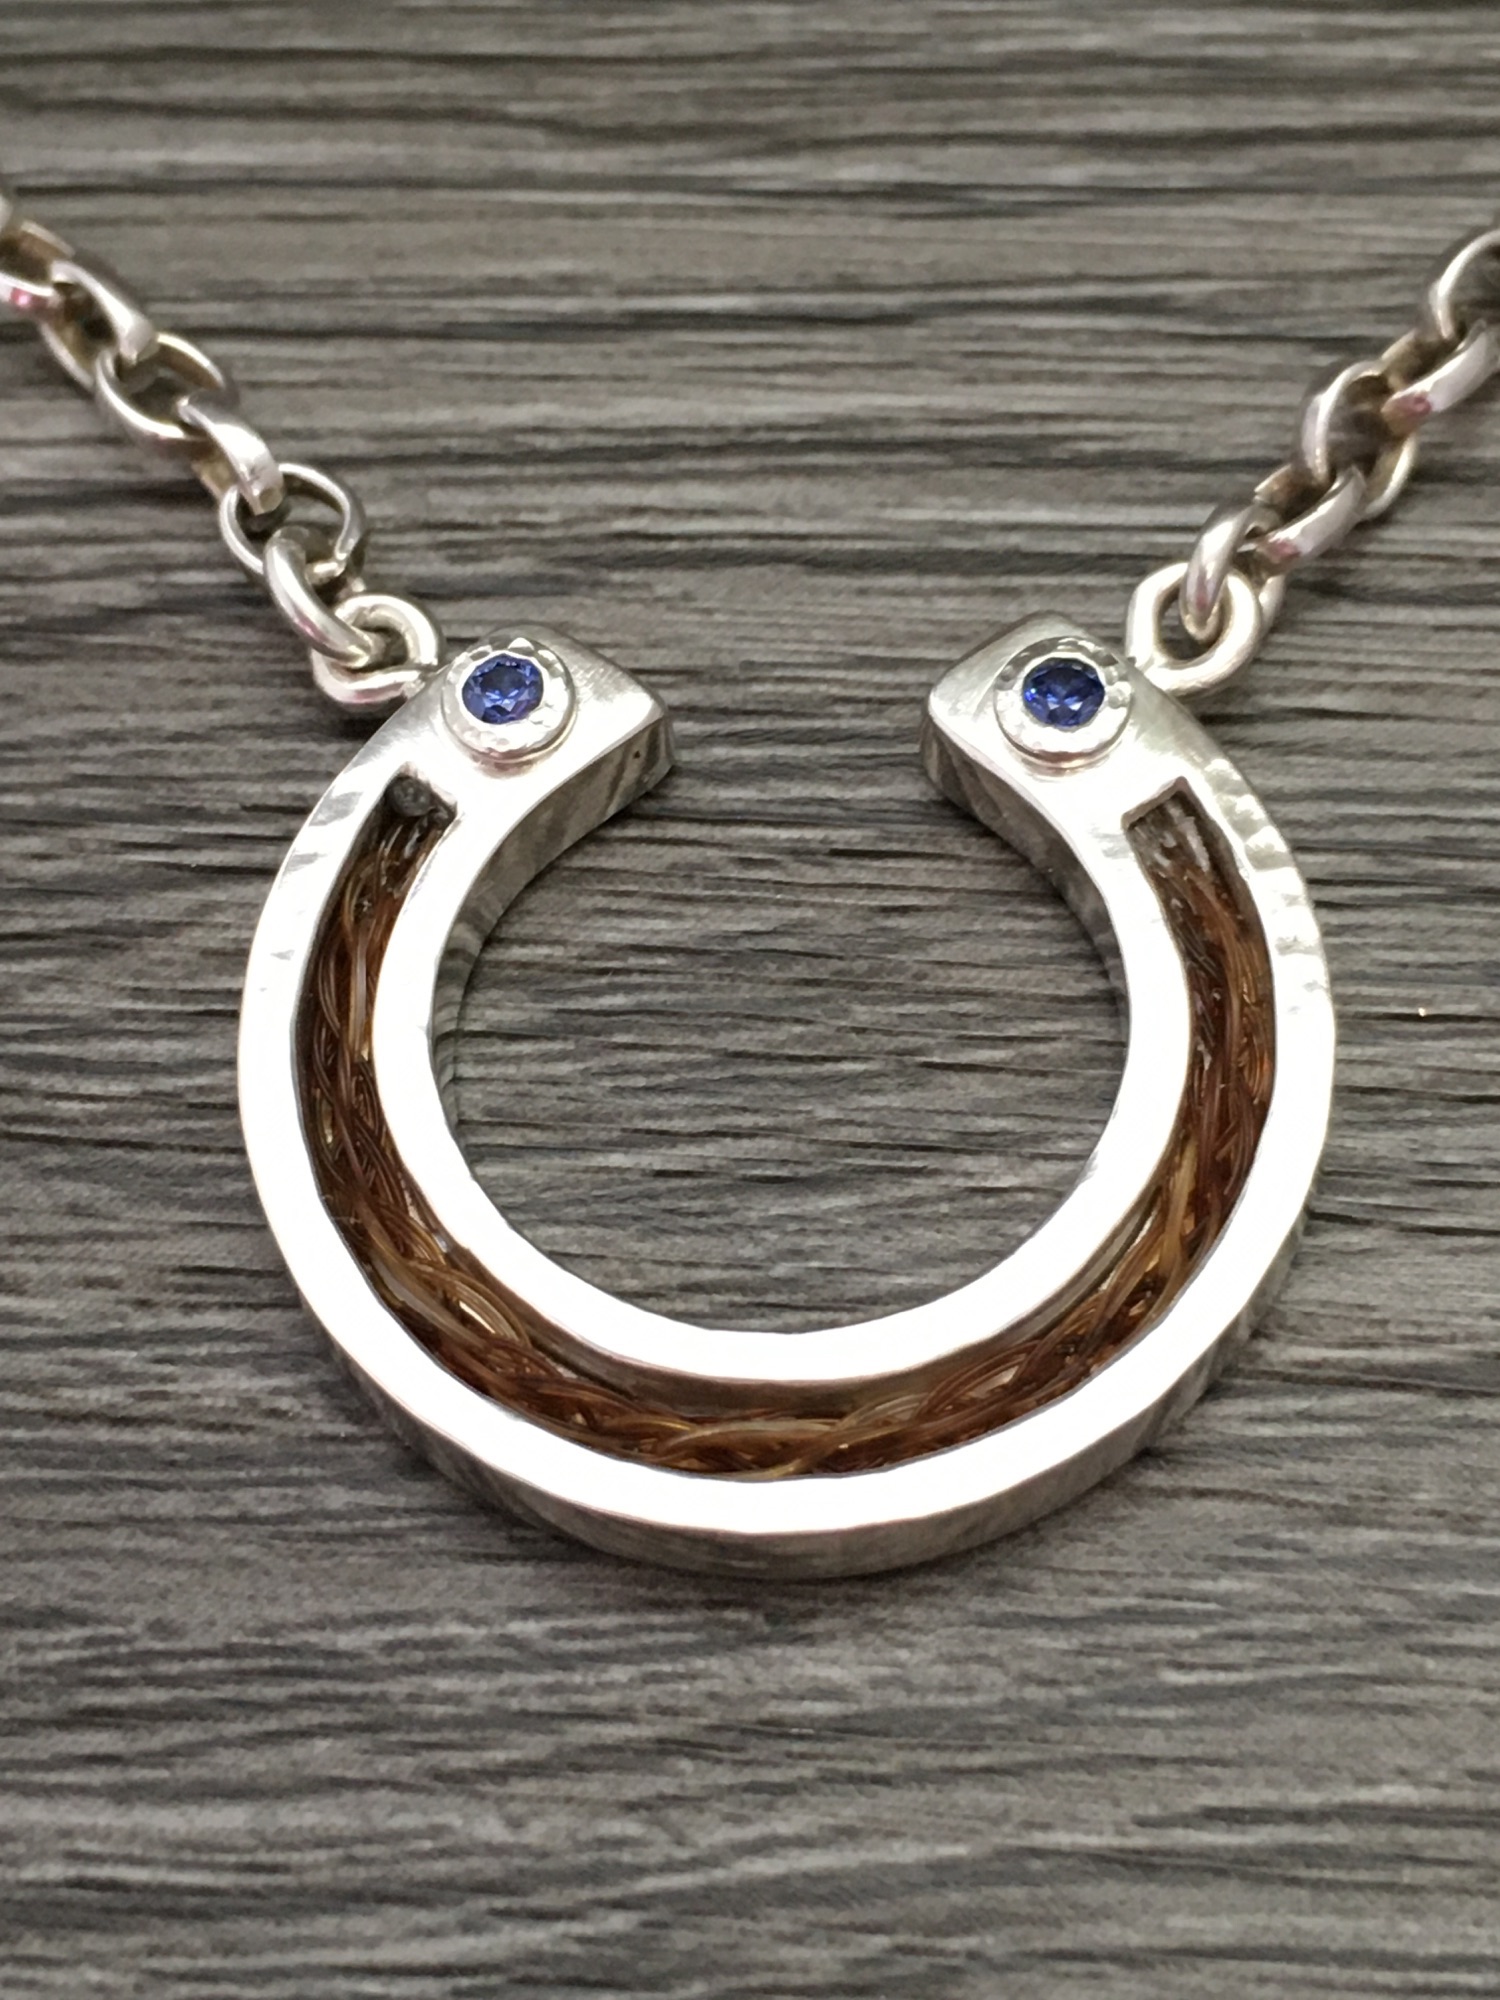 horsehair horseshoe pendant necklace